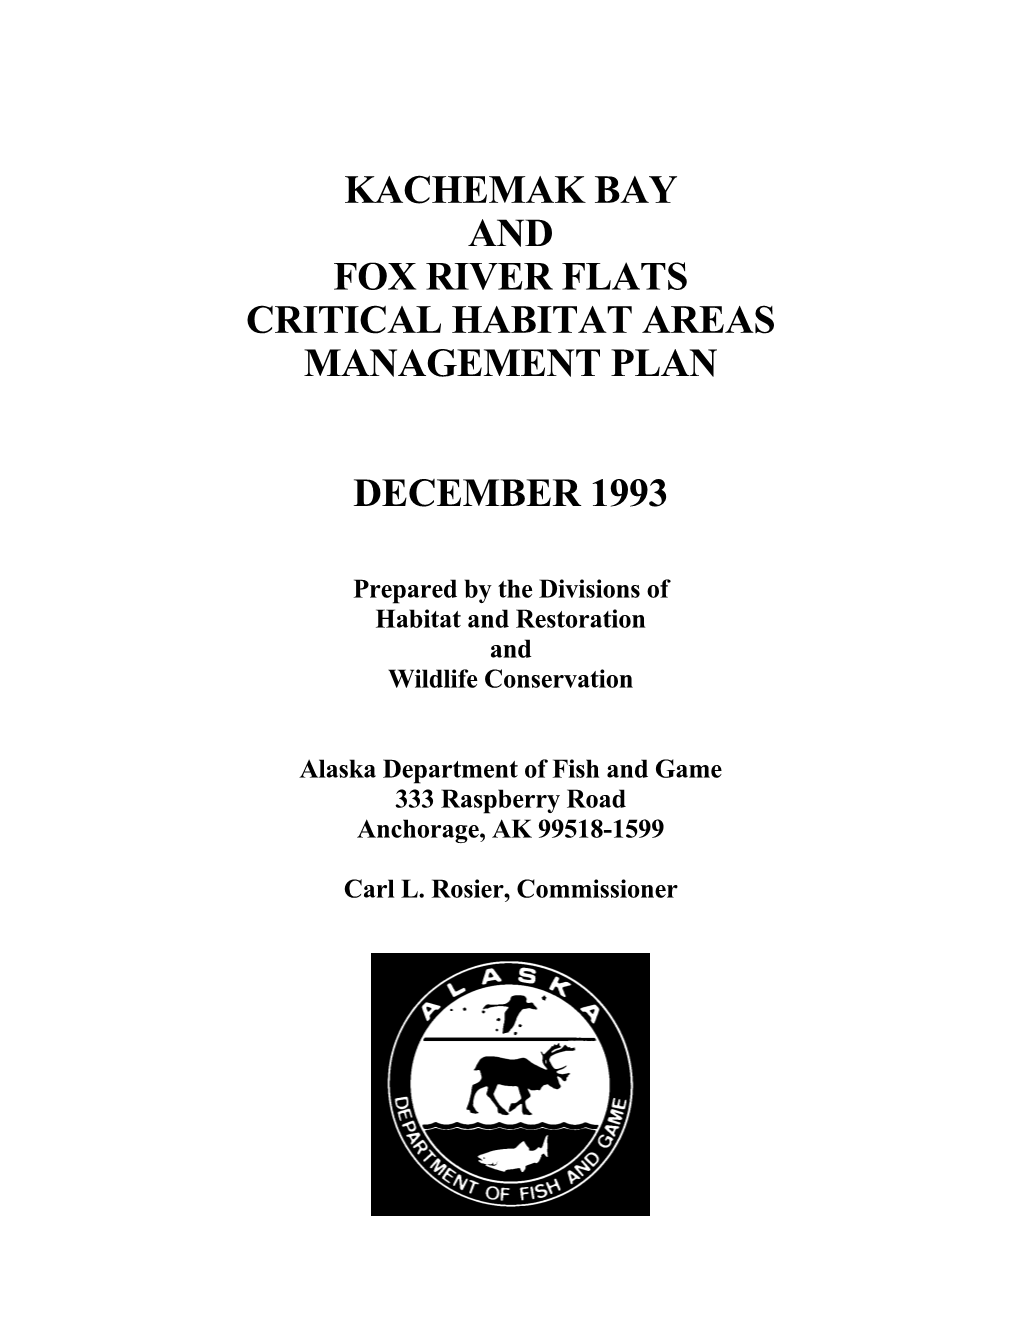 Kachemak Bay Fox River Flats Critical Habitat